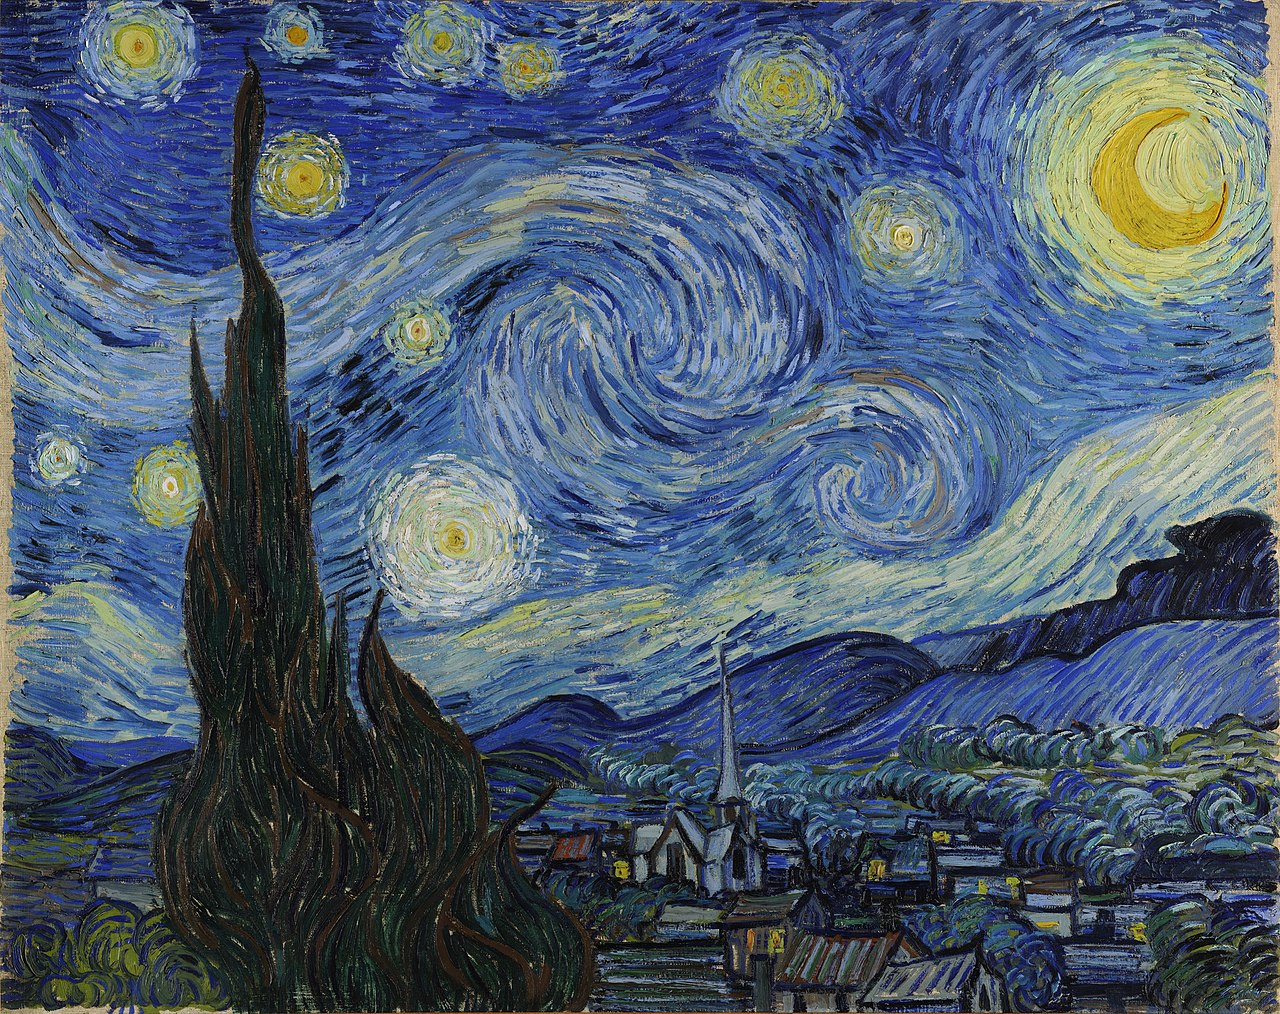 La noche estrellada by Vincent van Gogh - 1889 - 73 x 92 cm Museum of Modern Art